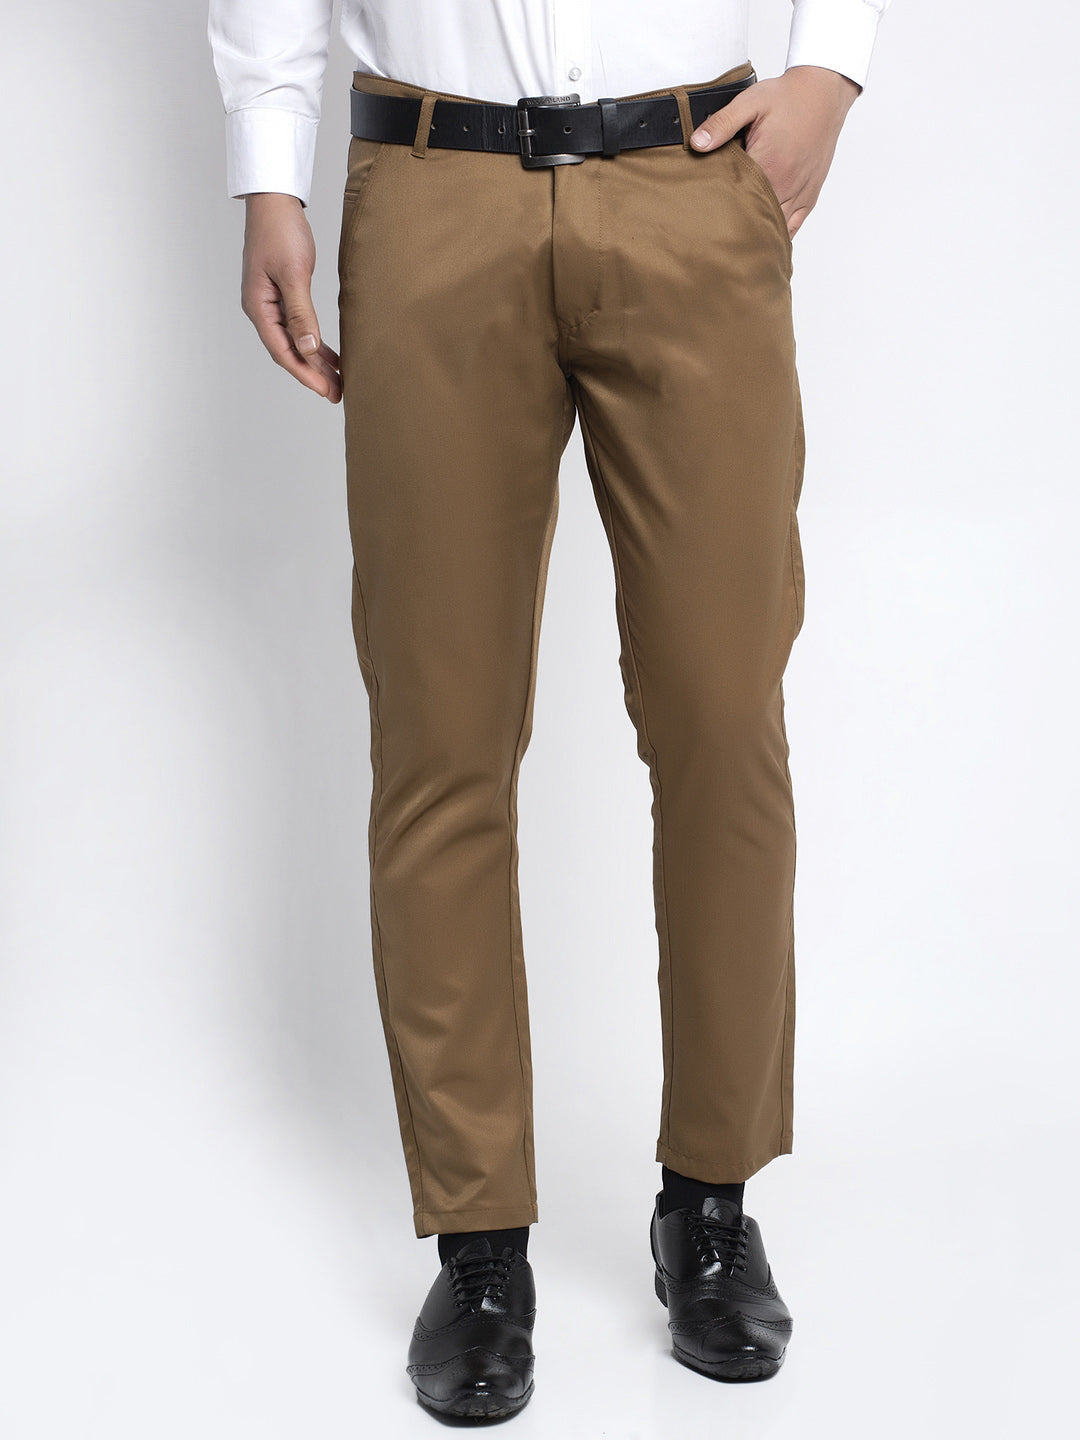 Jainish Men's Brown Tapered Fit Formal Trousers